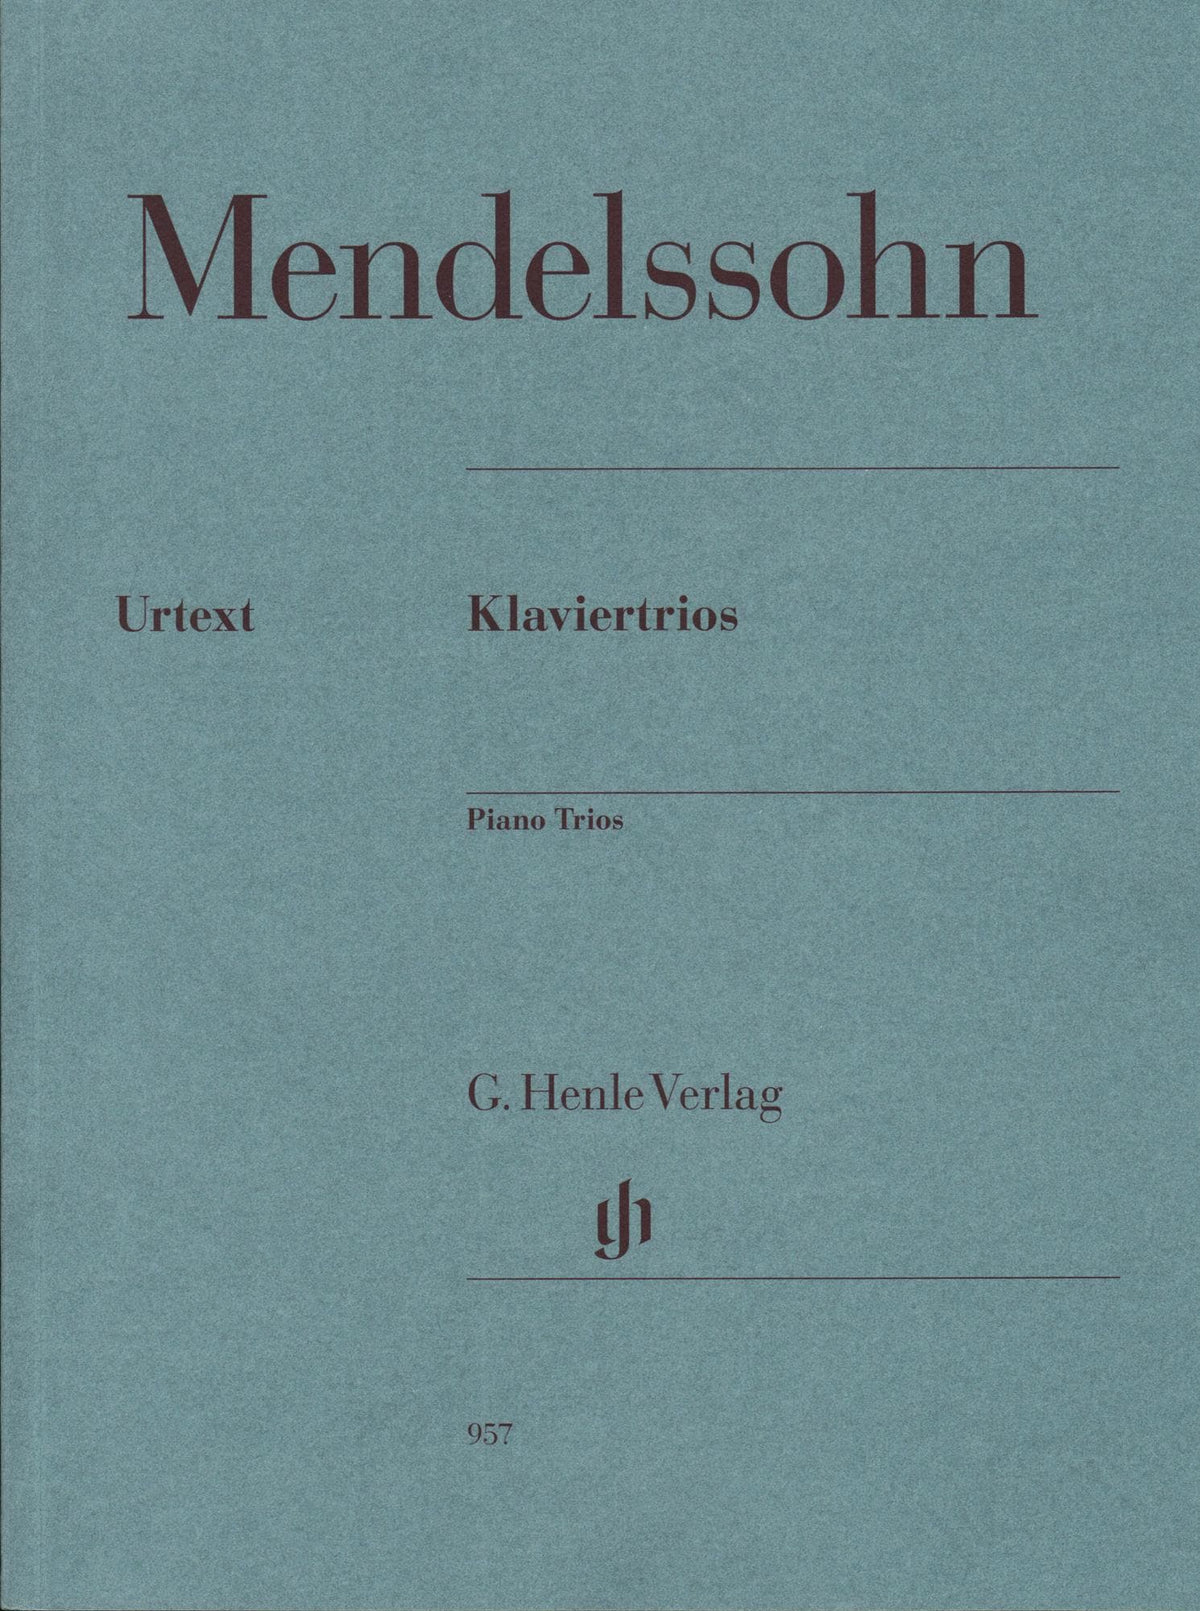 Mendelssohn, Felix - Piano Trios, Op 49 and 66 - Violin, Cello, and Piano - G Henle Verlag URTEXT